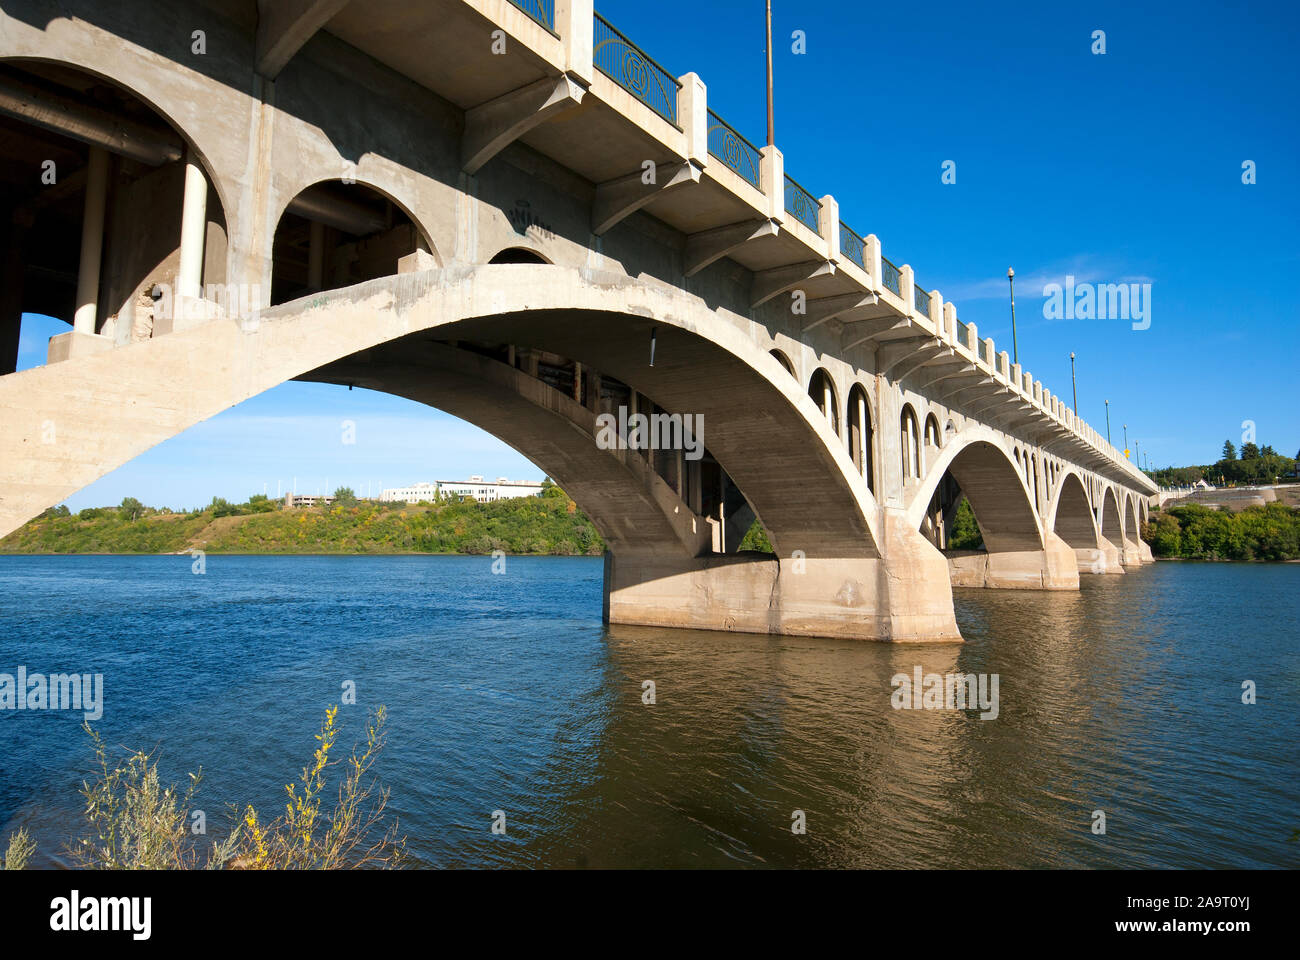 University Bridge crossing the South Saskatchewan river in Saskatoon, Saskatchewan, Canada Stock Photo